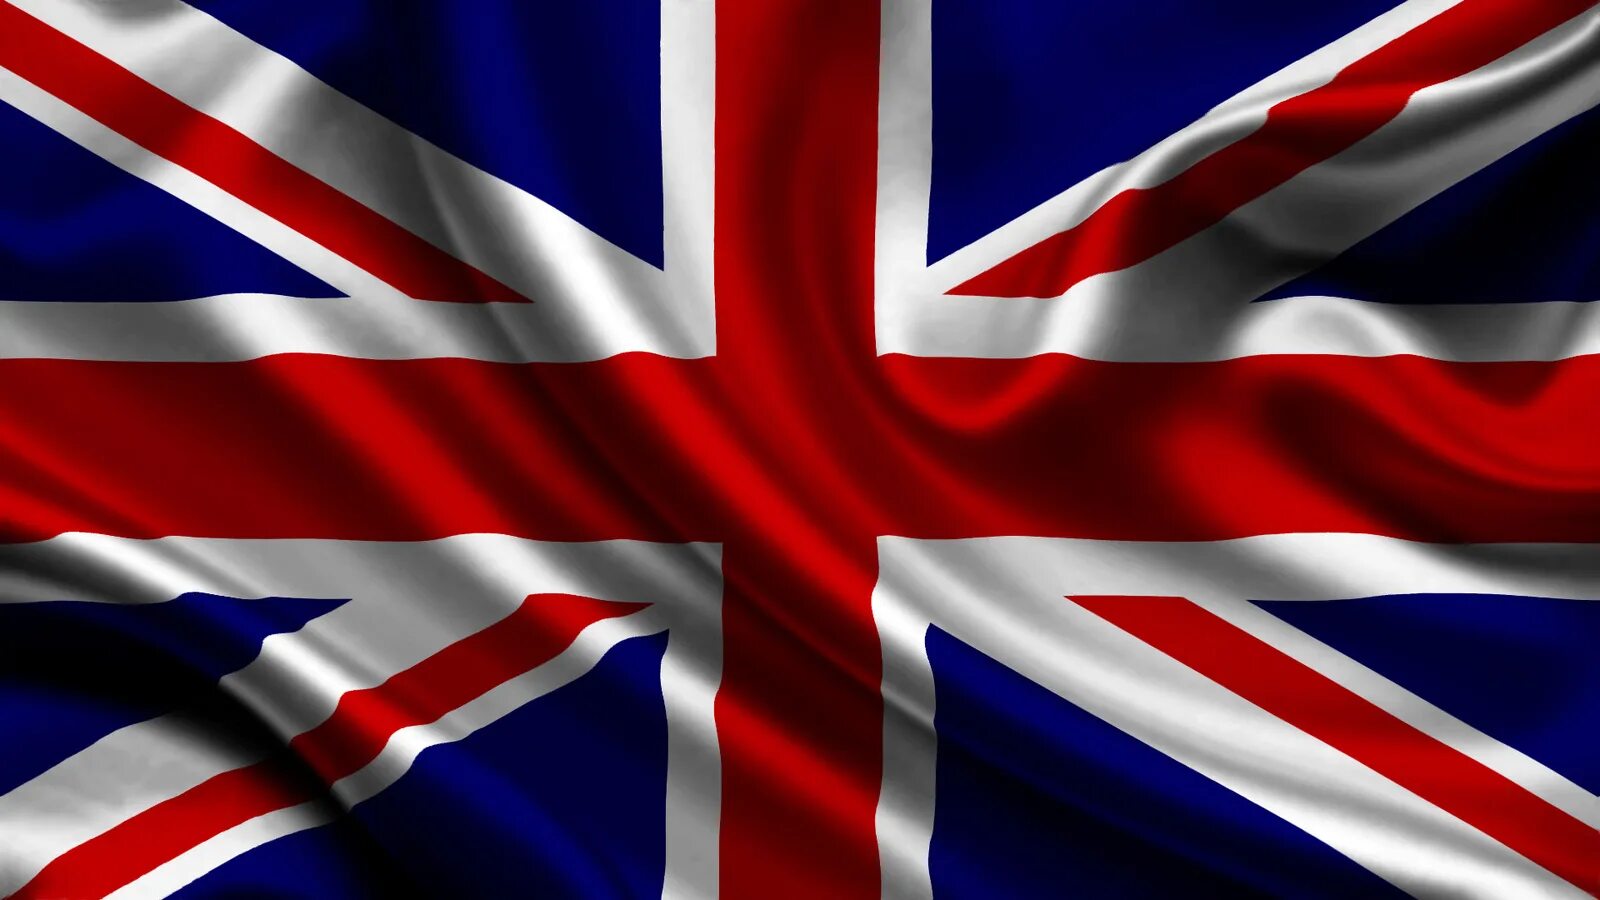 Britain is a nation. Юнион Джек флаг Великобритании. Великобритания и Юнайтед кингдом. Флаг Юнайтед кингдом. Соединённое королевство Великобритании флаг.